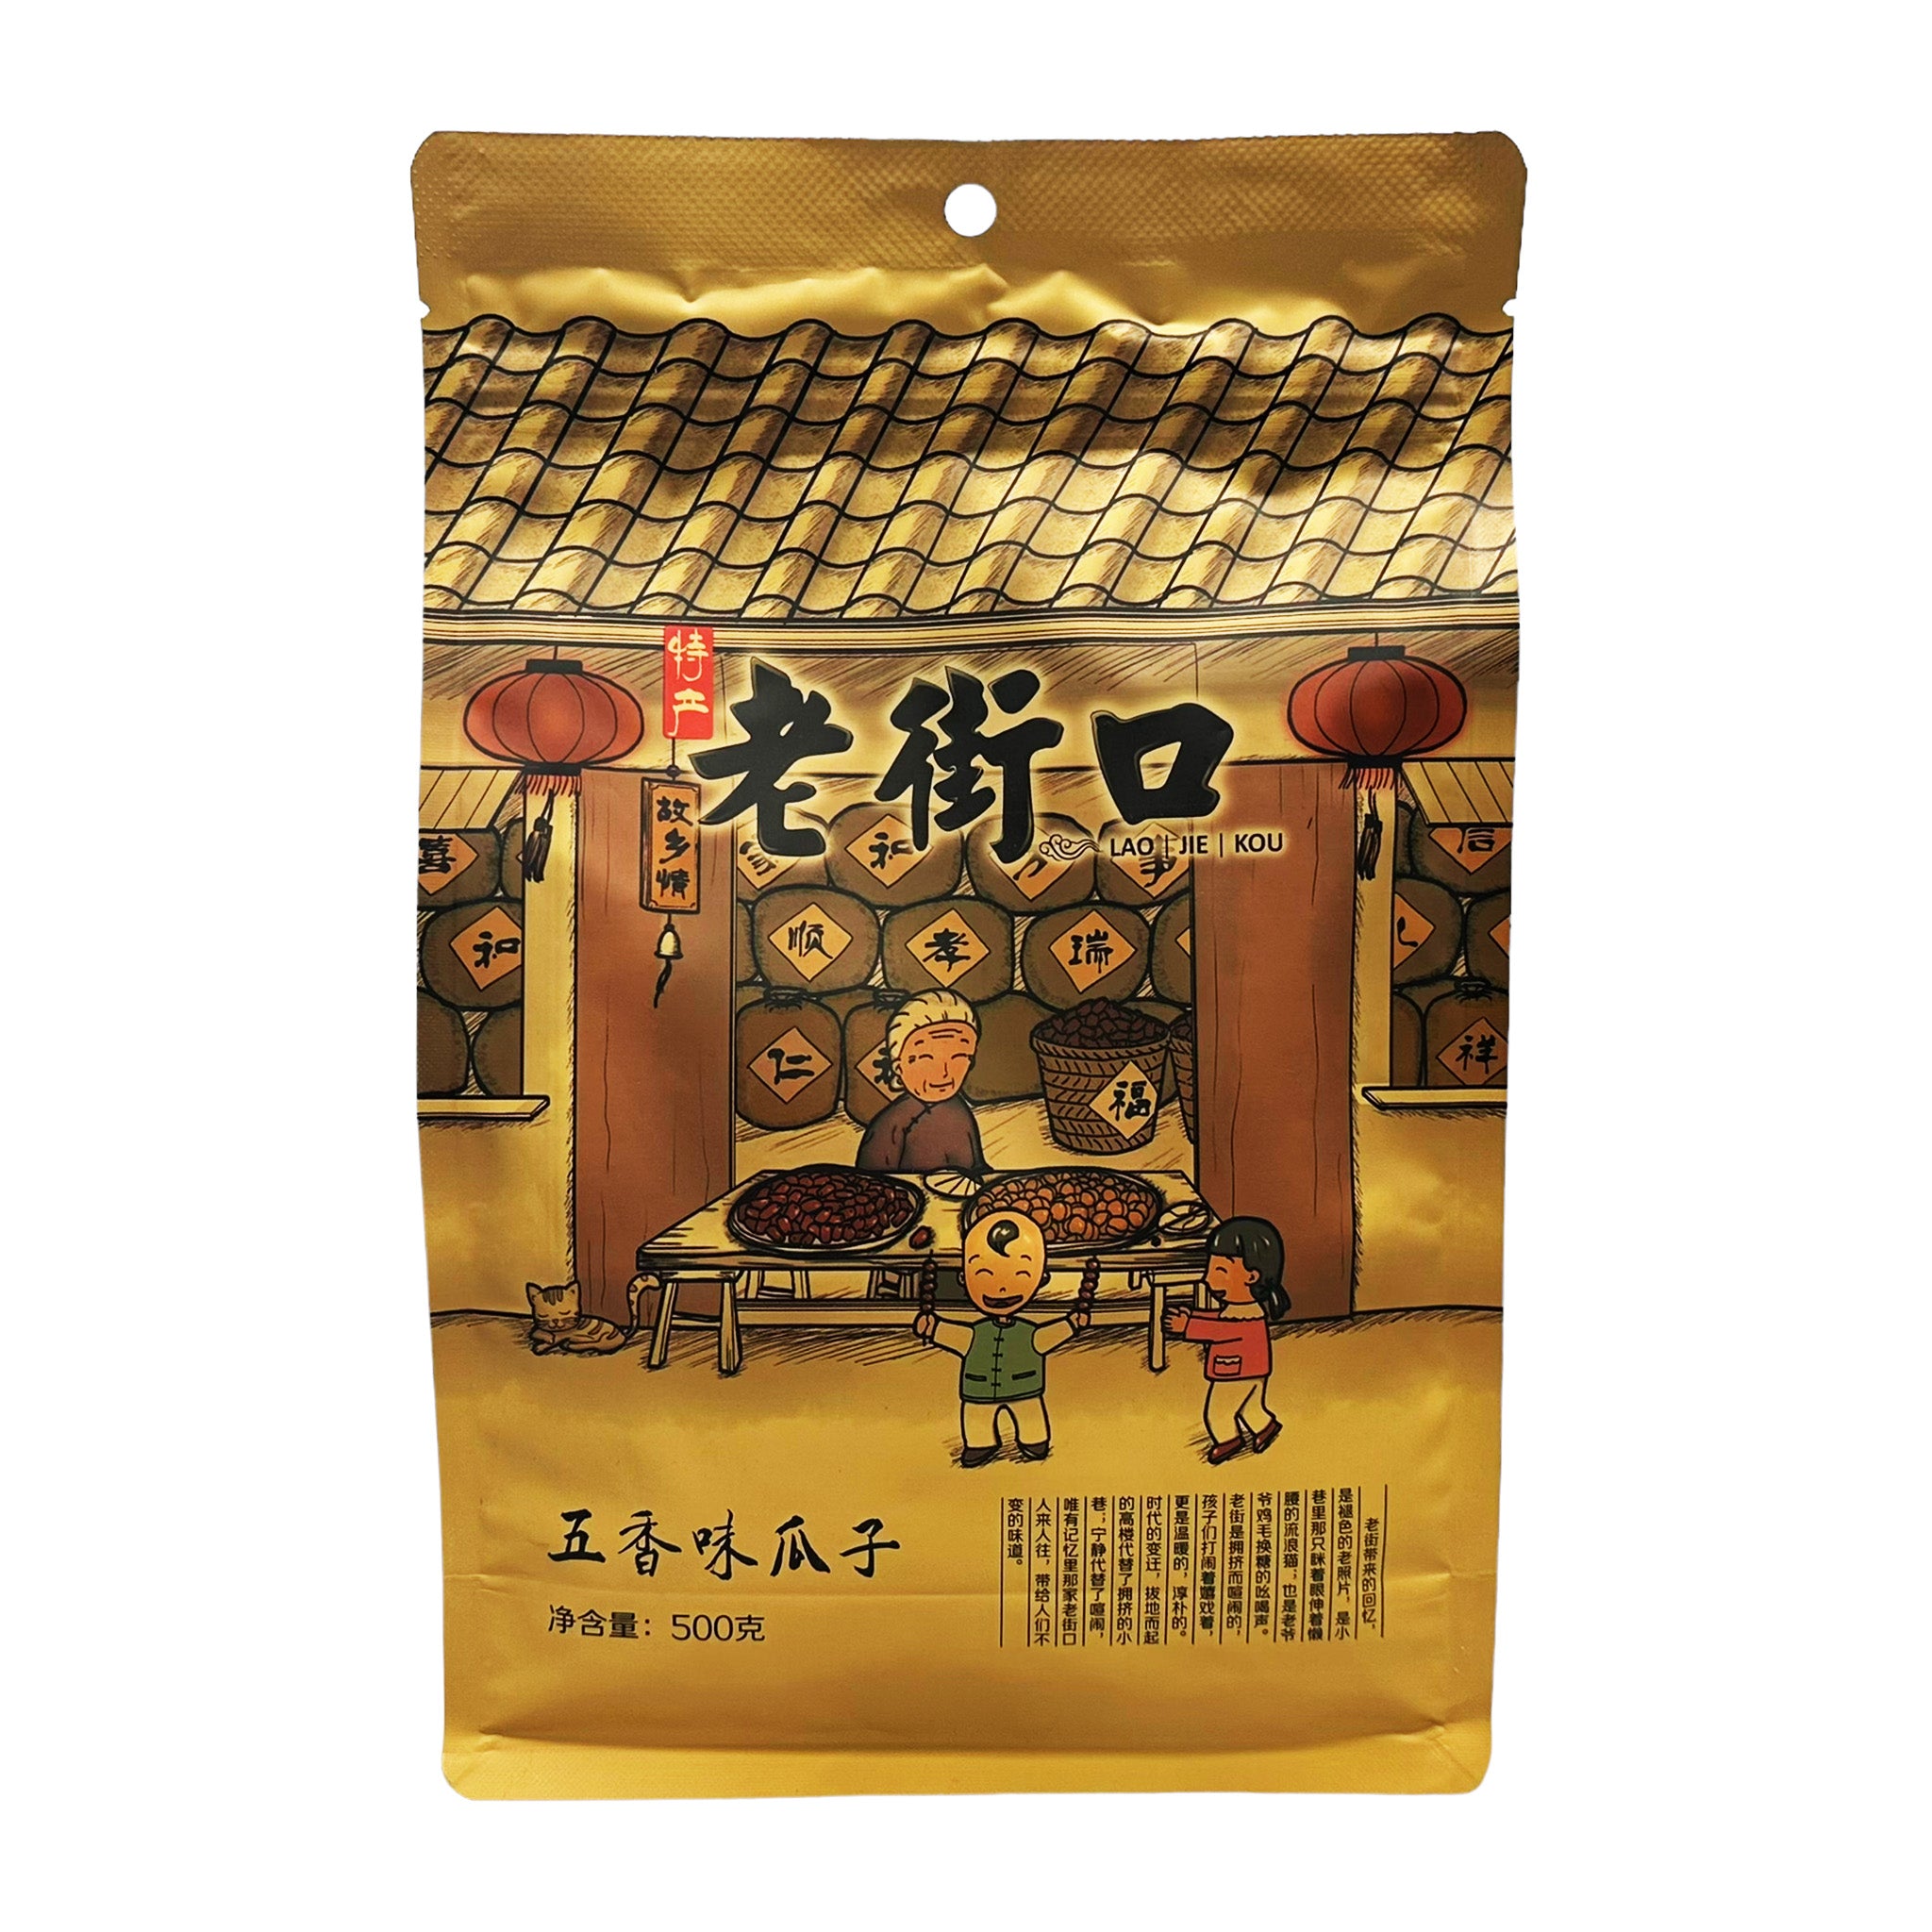 We make buying your favorite Lao Jie Kou Sunflower Seed - Five 